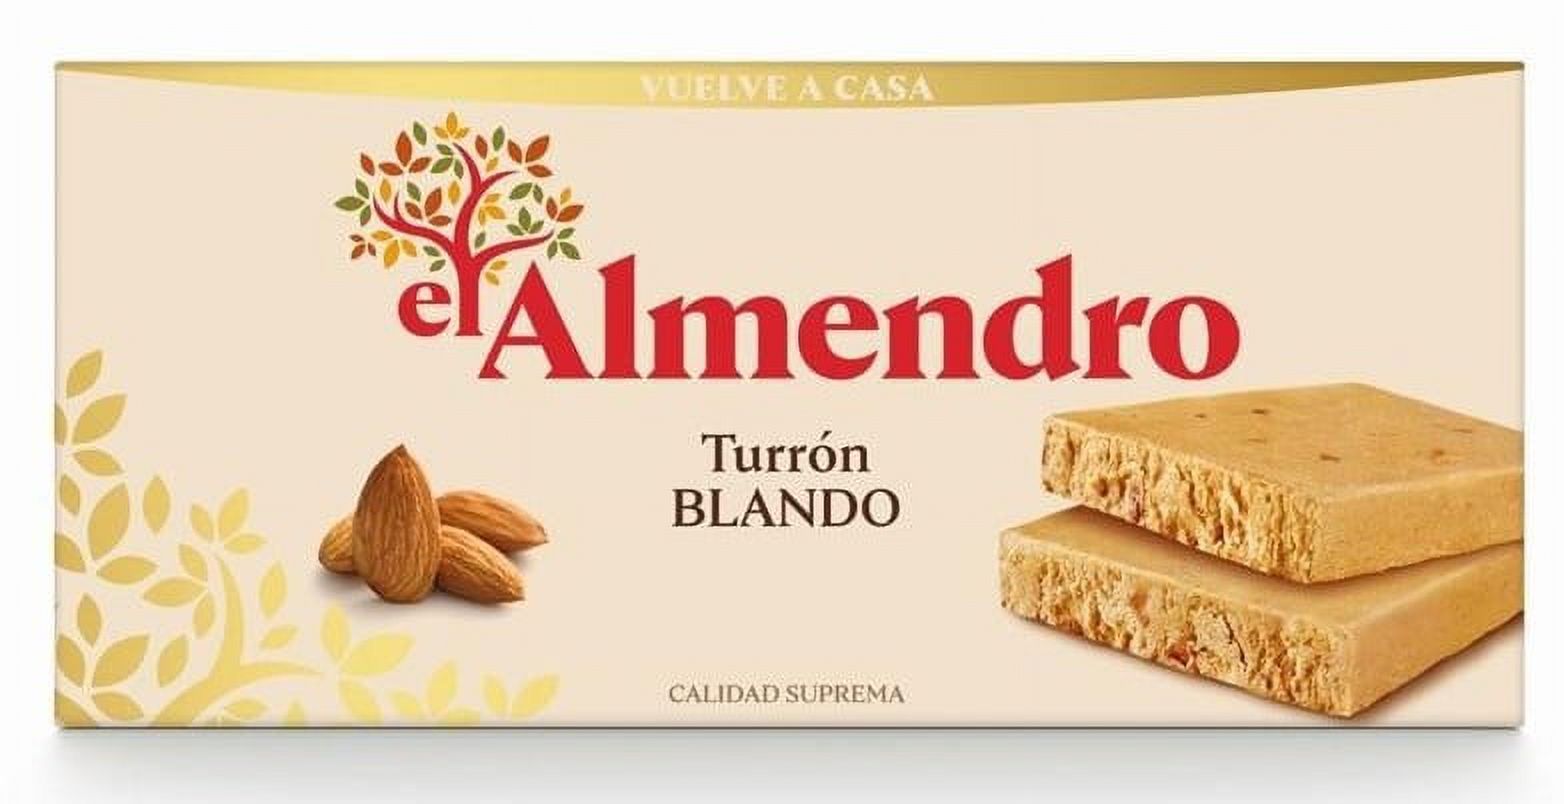 El Almendro Turron Blando 200 grs (7 oz.) 2-Pack - image 2 of 2